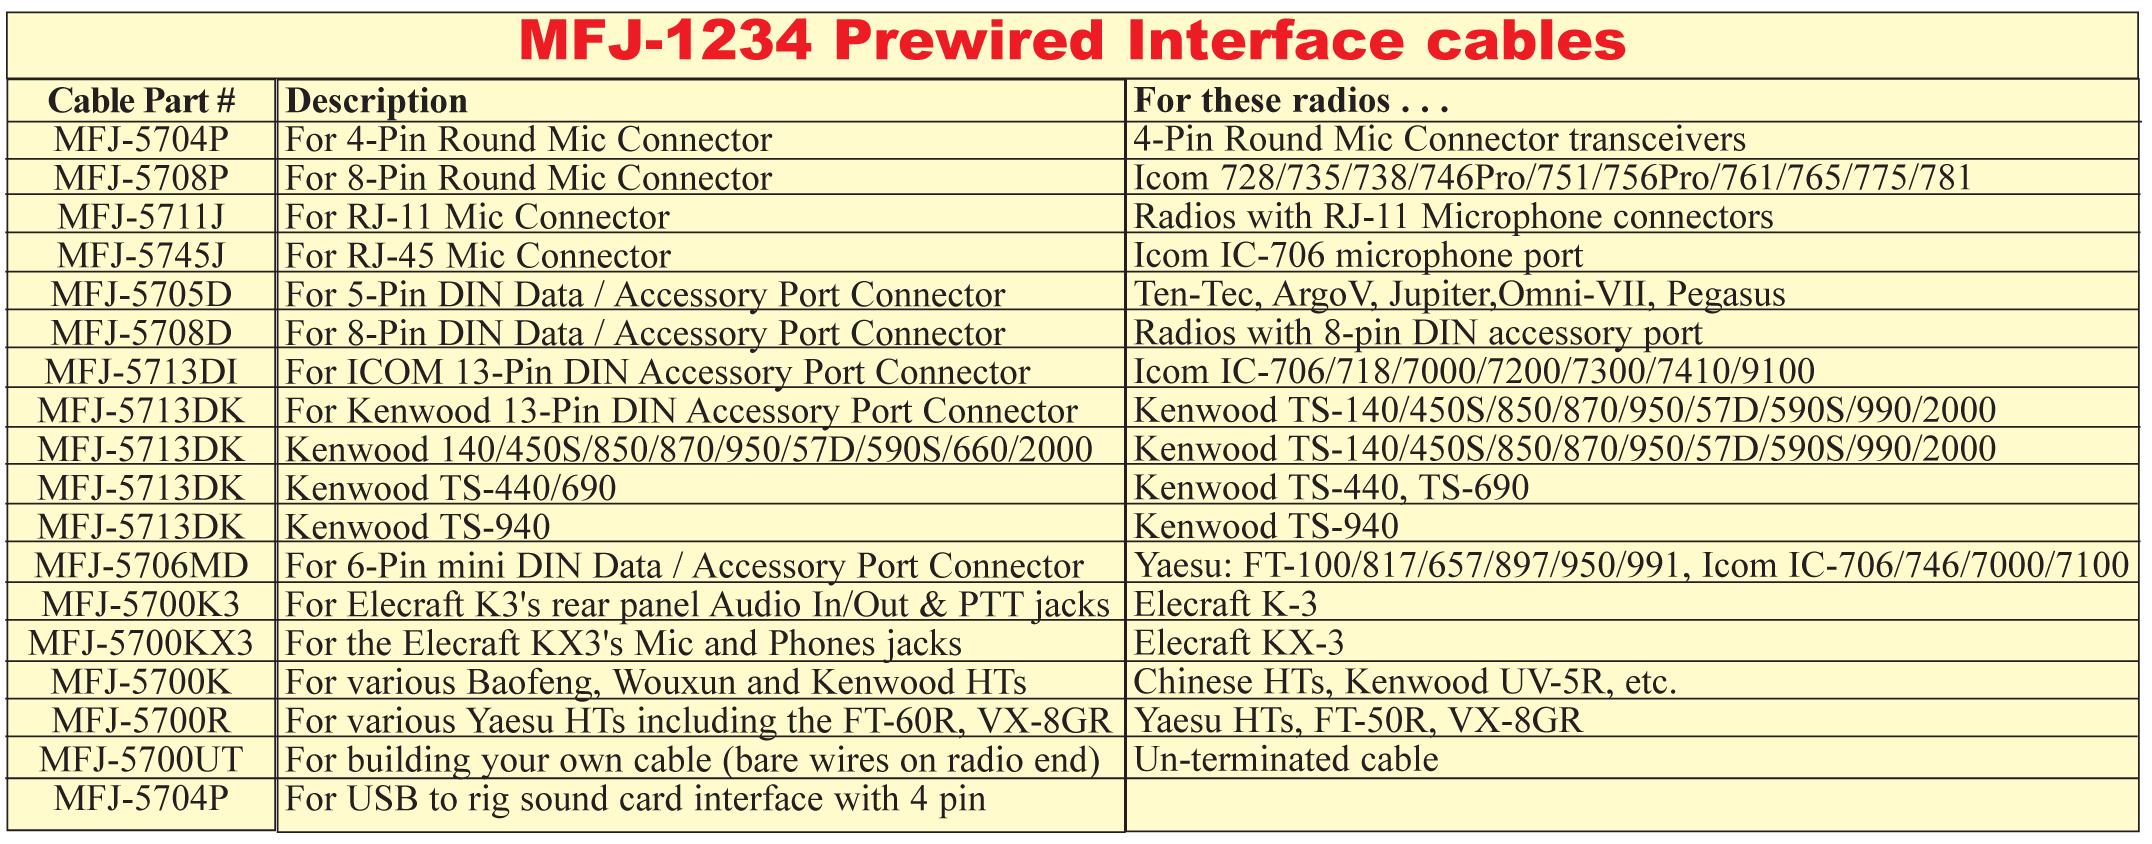 MFJ-1234 cables